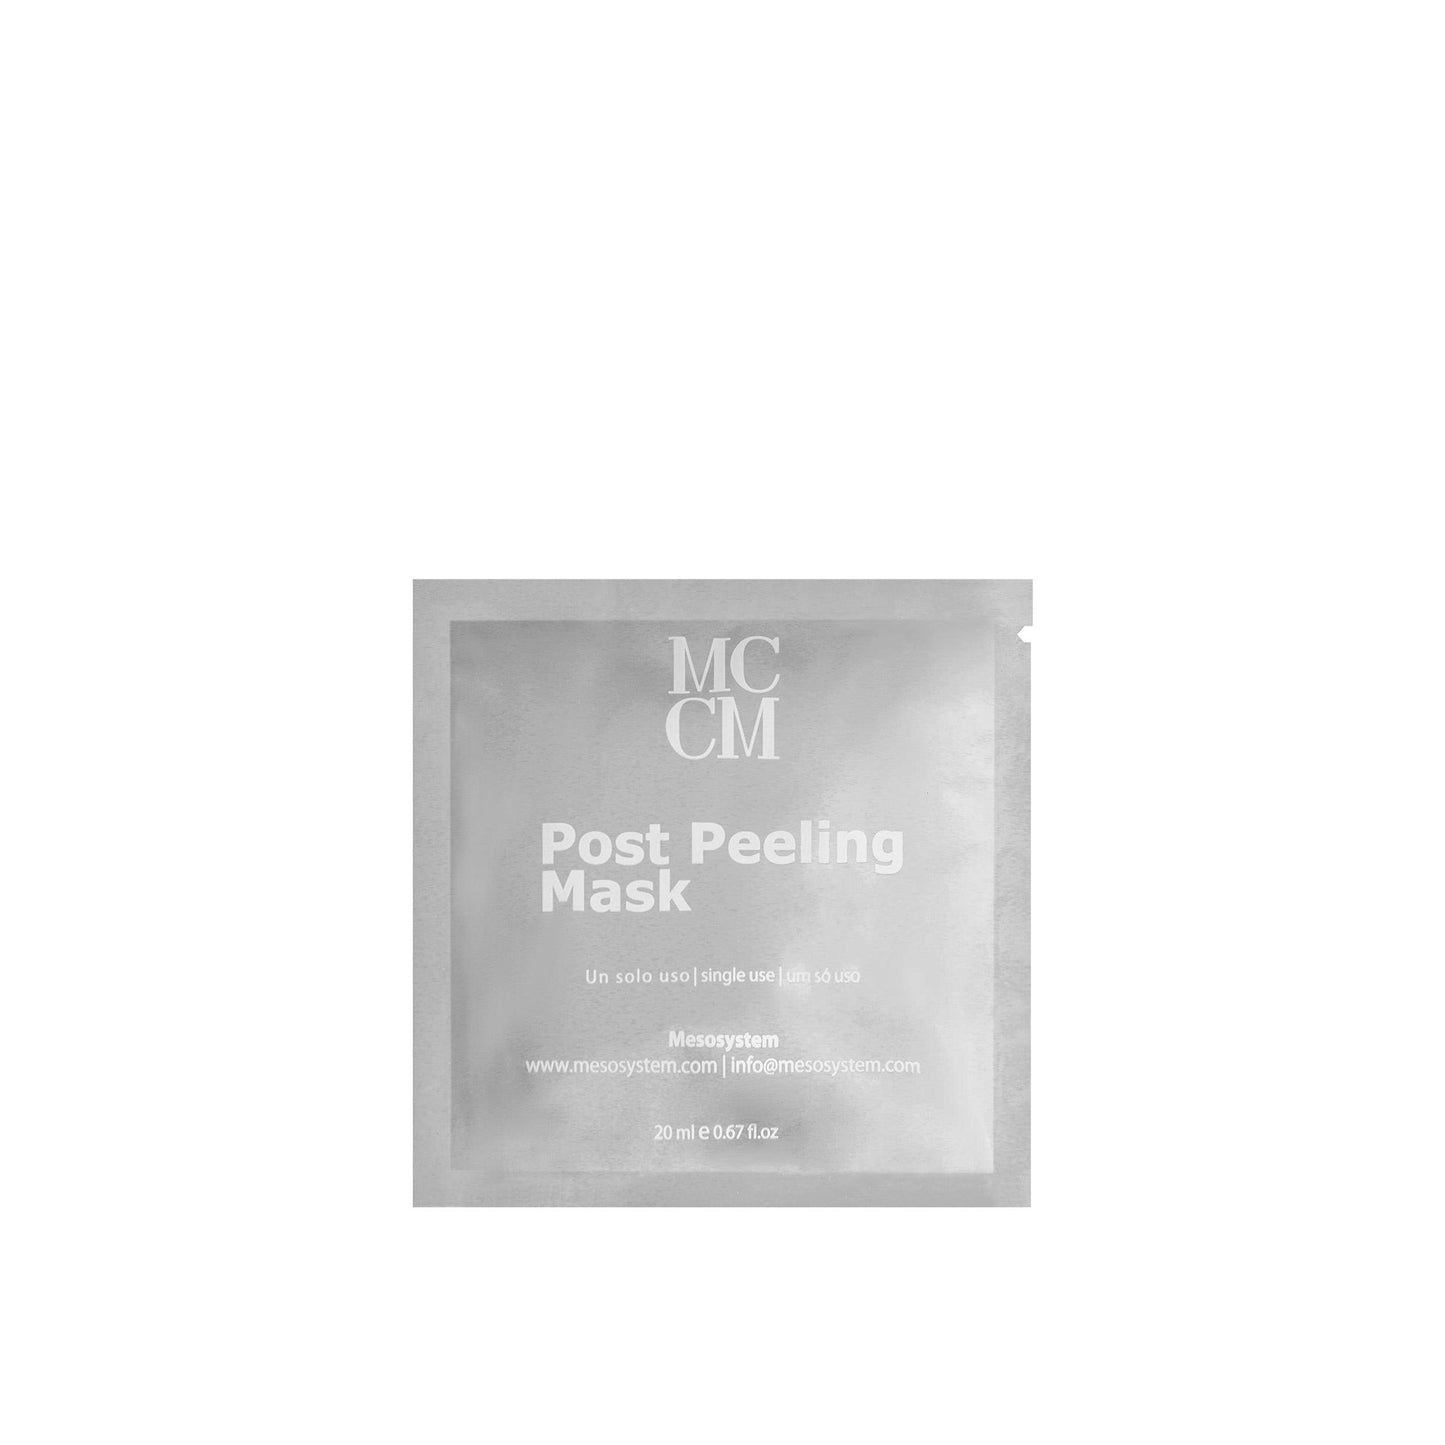 Post Peeling Mask - MCCM Medical Cosmetics